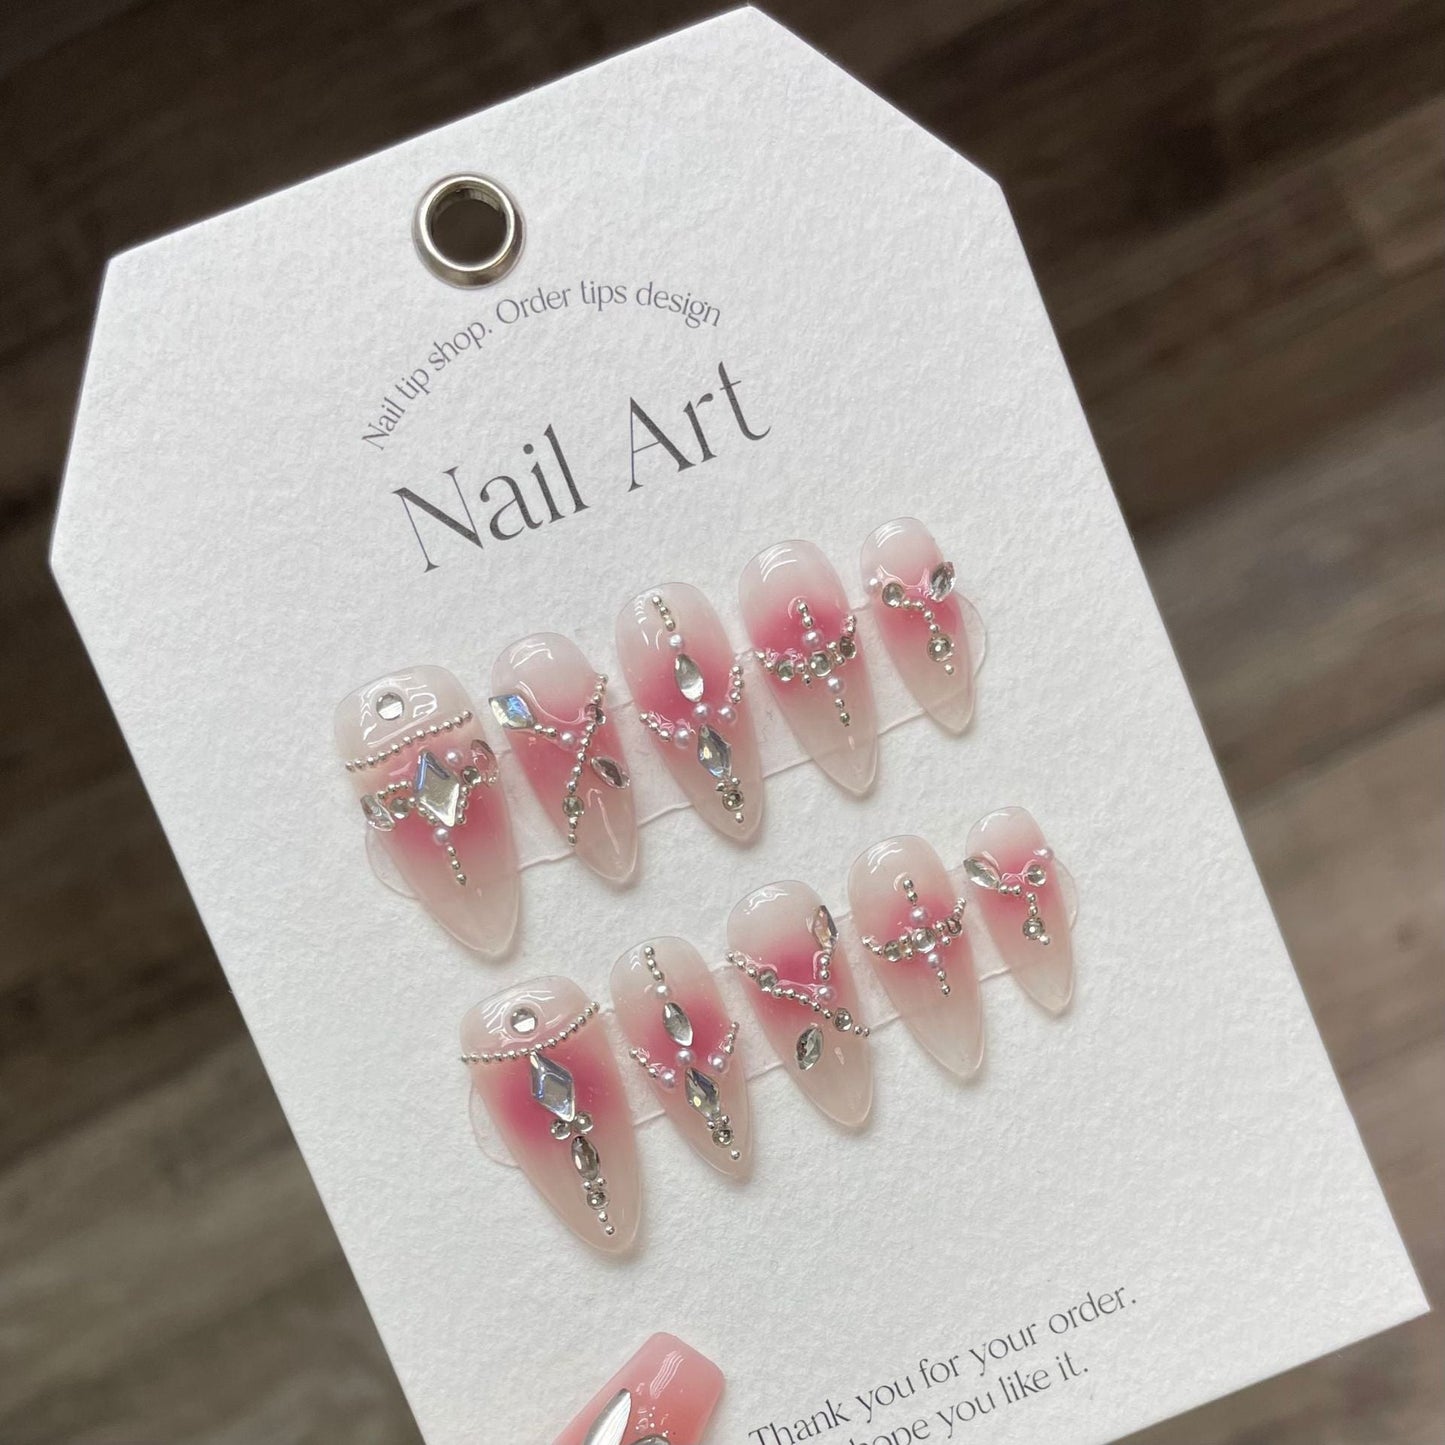 954/957 young girl style press on nails 100% handmade false nails pink